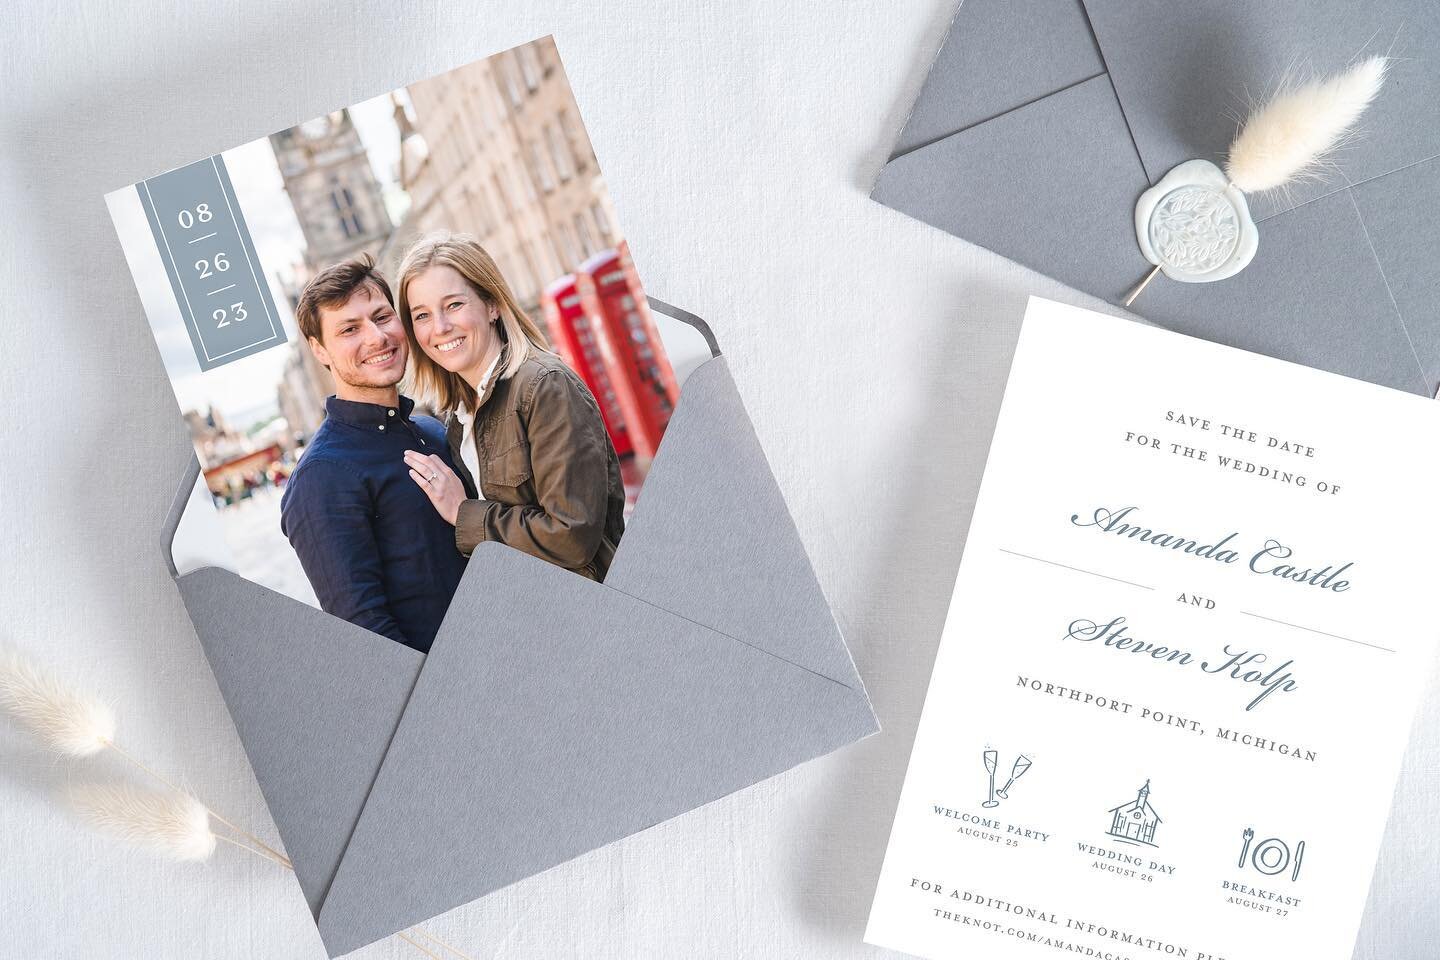 Save the dates 🤍
&bull;
&bull;

#wedding #bride #design #cincinnati #ohio #cincinnatiwedding #graphicdesign #invites #invitations #weddinginspiration #weddinginvitations